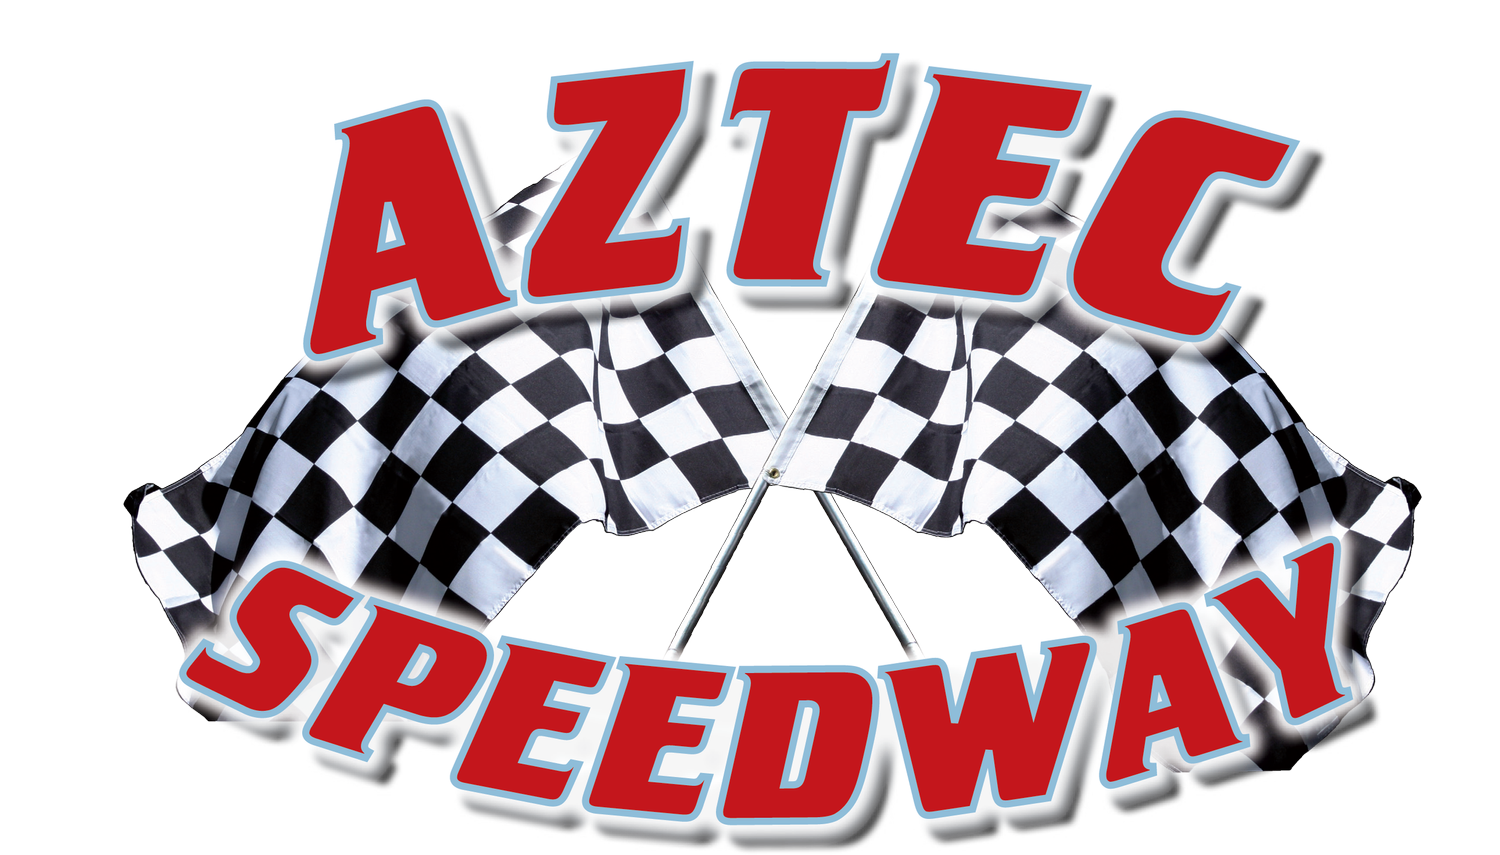 Aztec Speedway Race Track